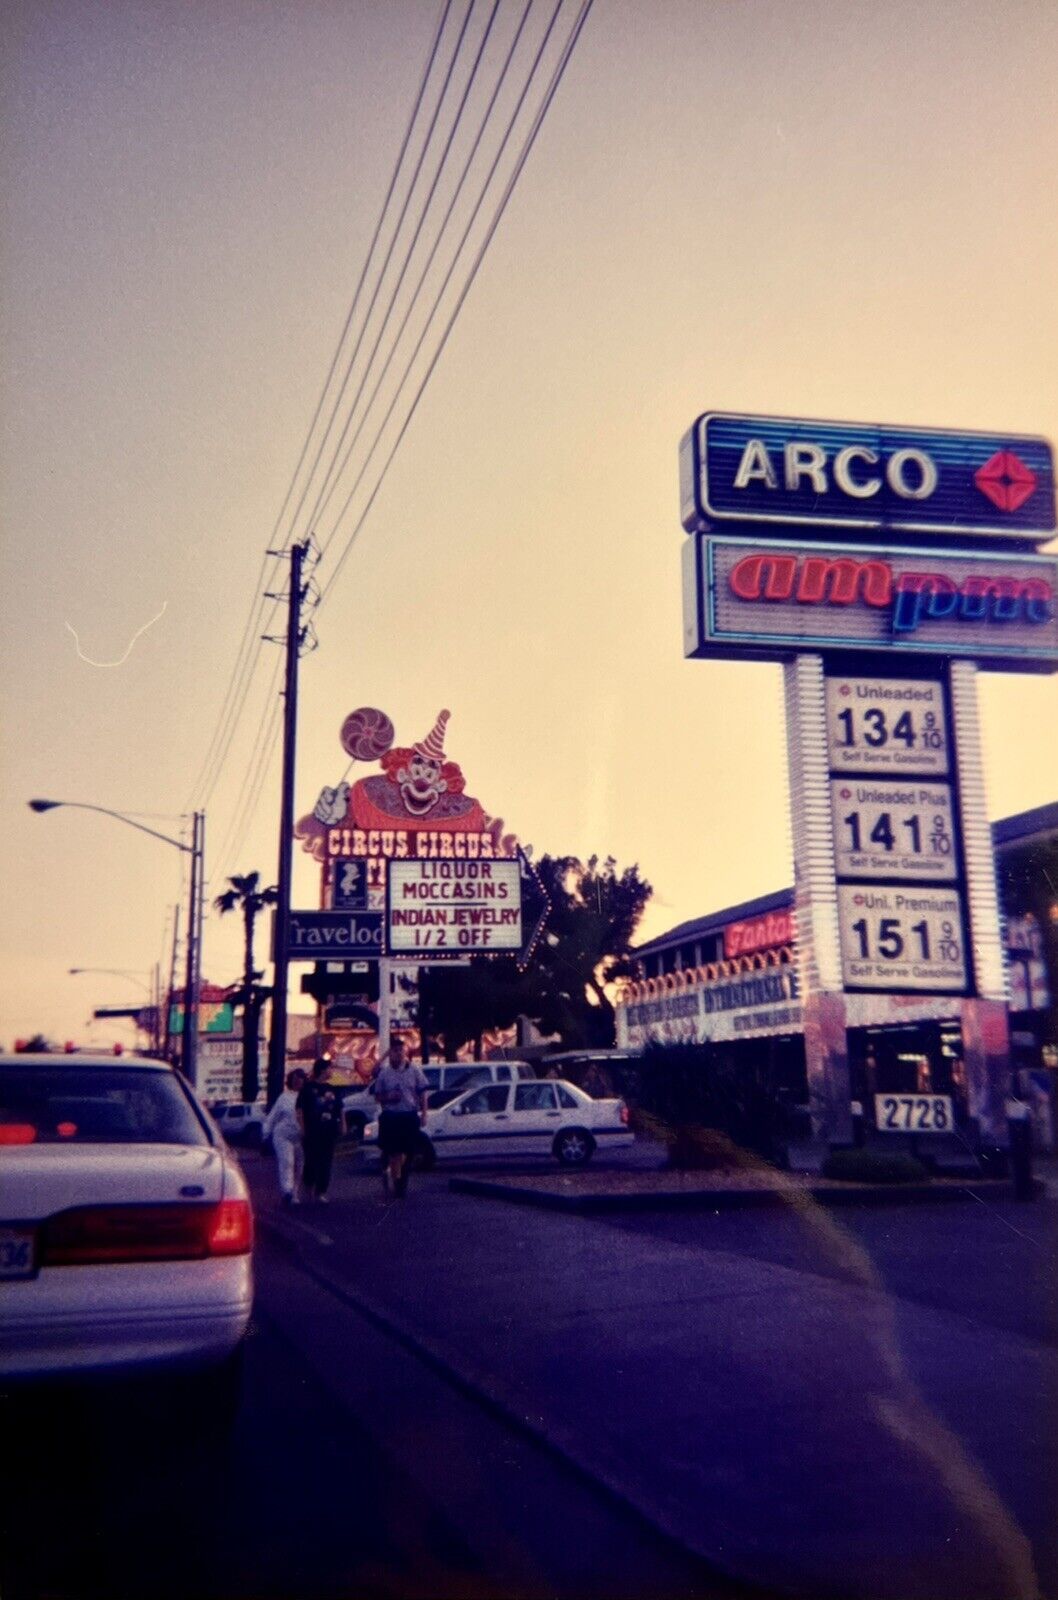 ARCo Gas Station Circus Circus Casino Las Vegas NV Picture Vintage Photograph